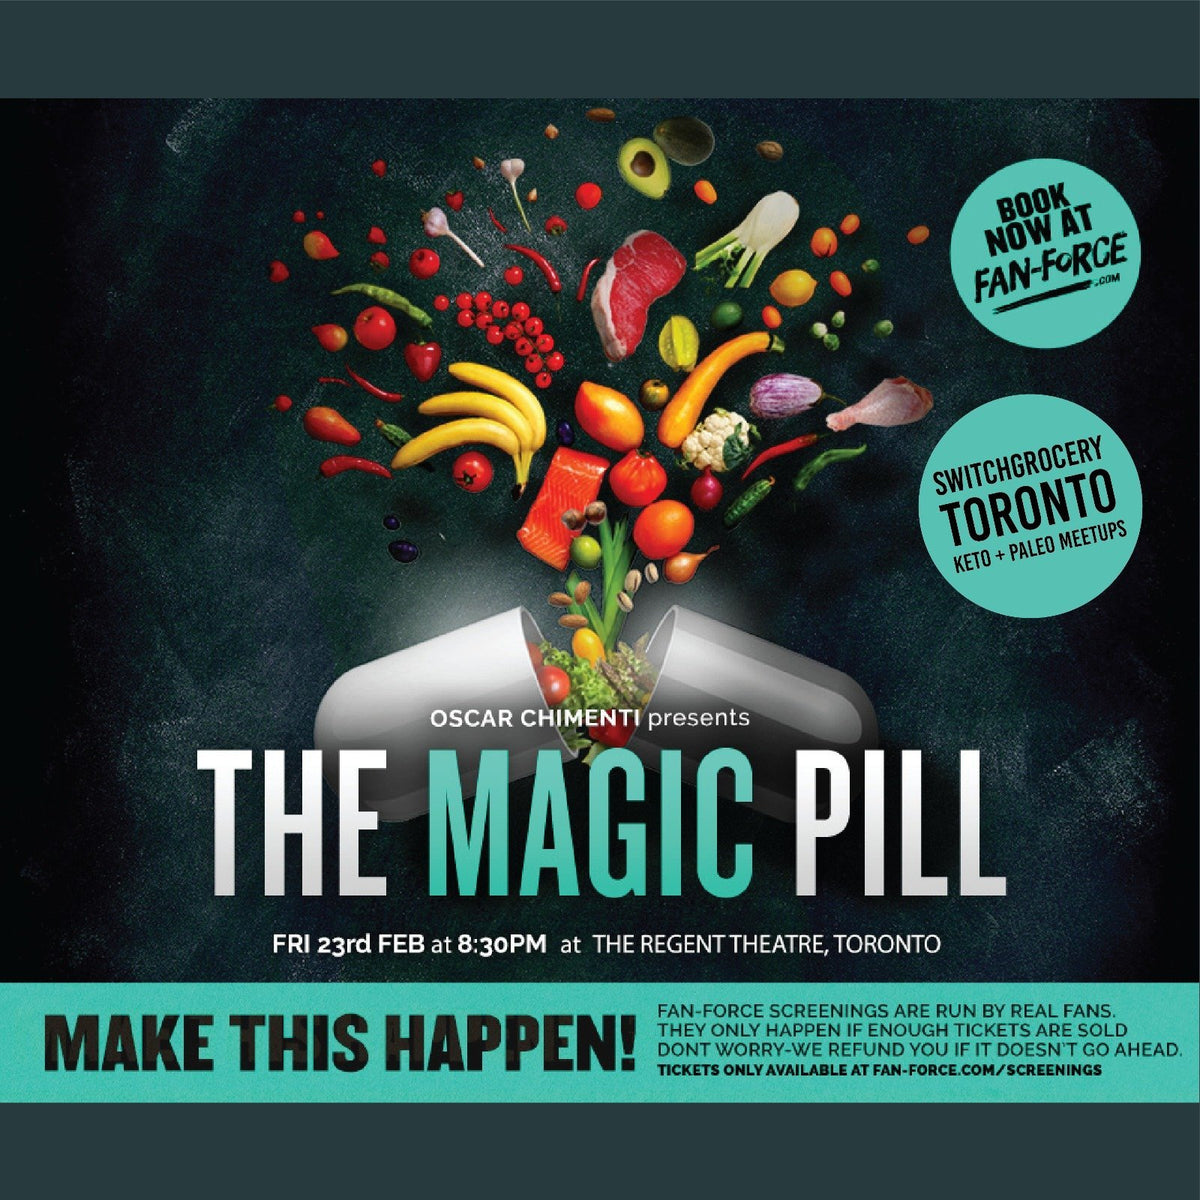 Meetup: The Magic Pill movie screening - Friday, February 23rd, 2018